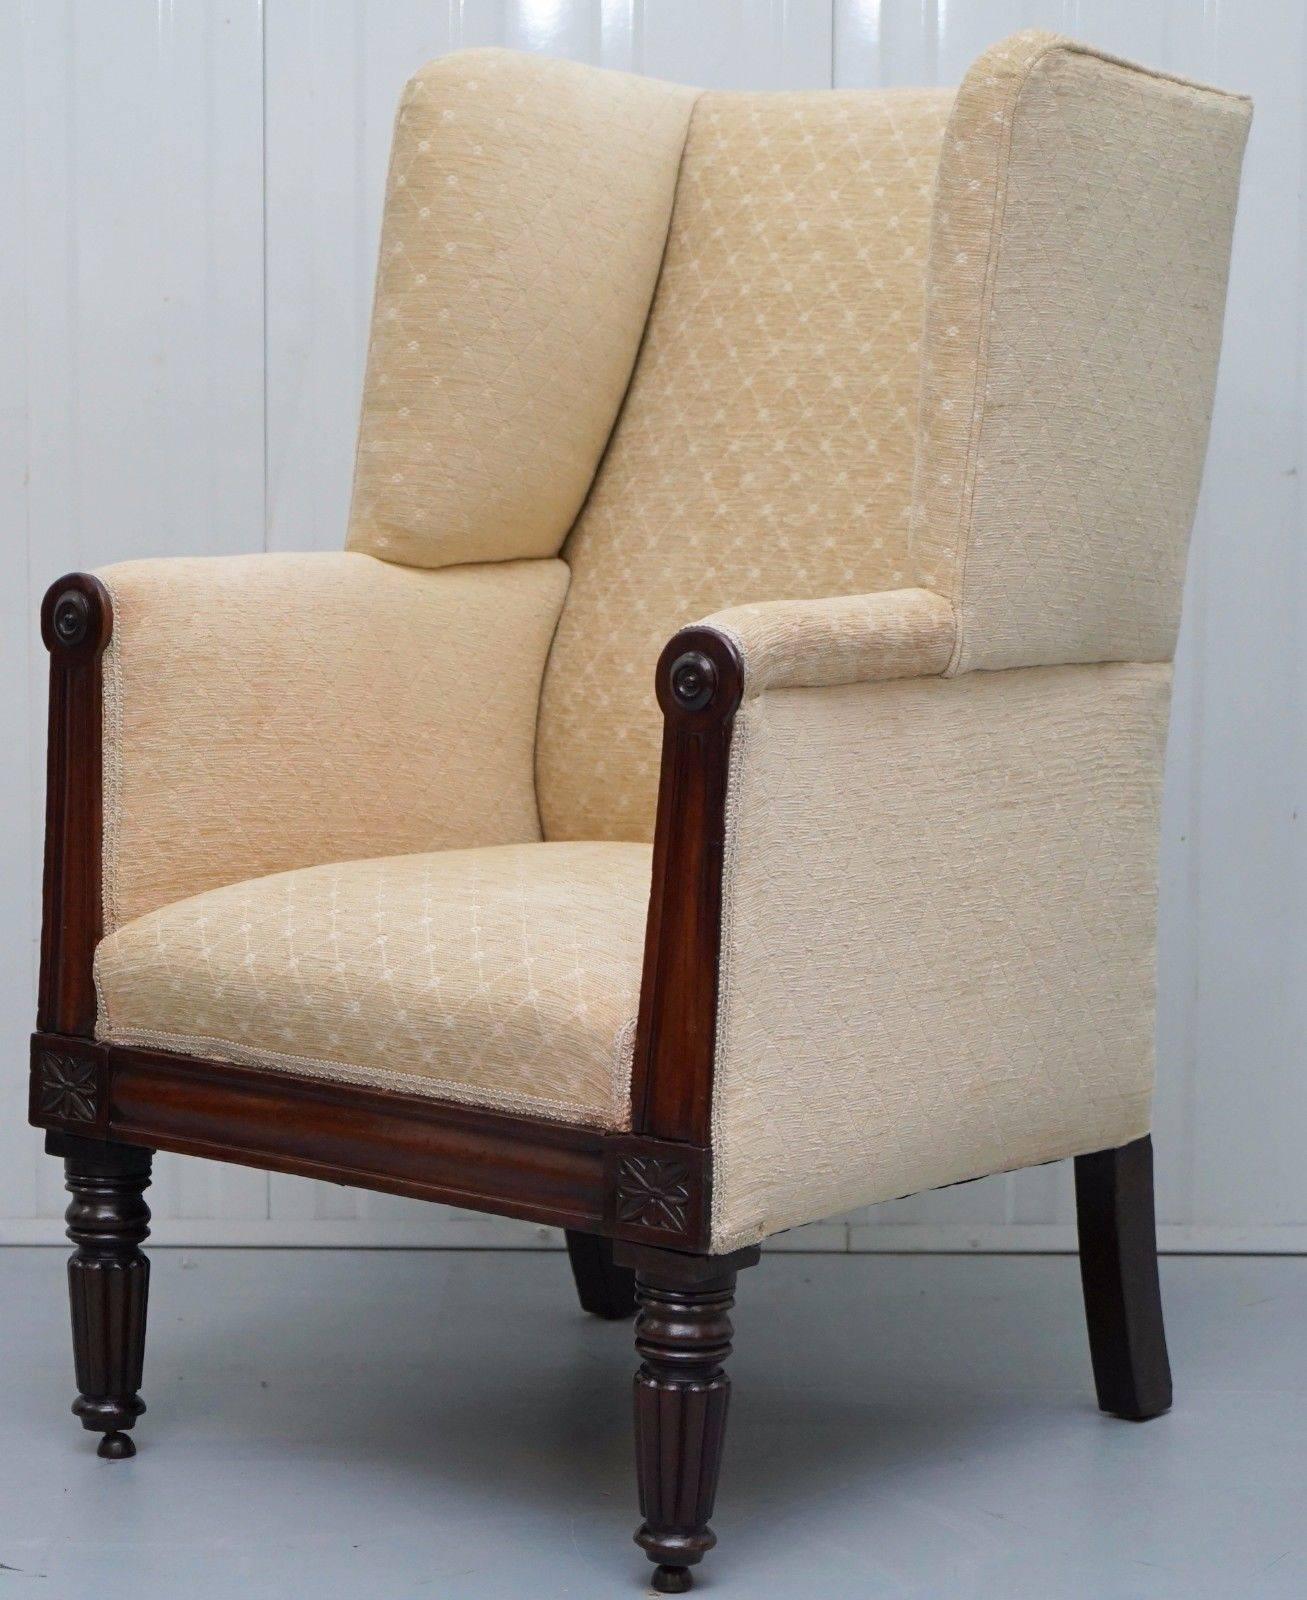 Georgian Rare circa 1790 Gillows Style Porters Chair Mahogany Framed Wingback Rare Find